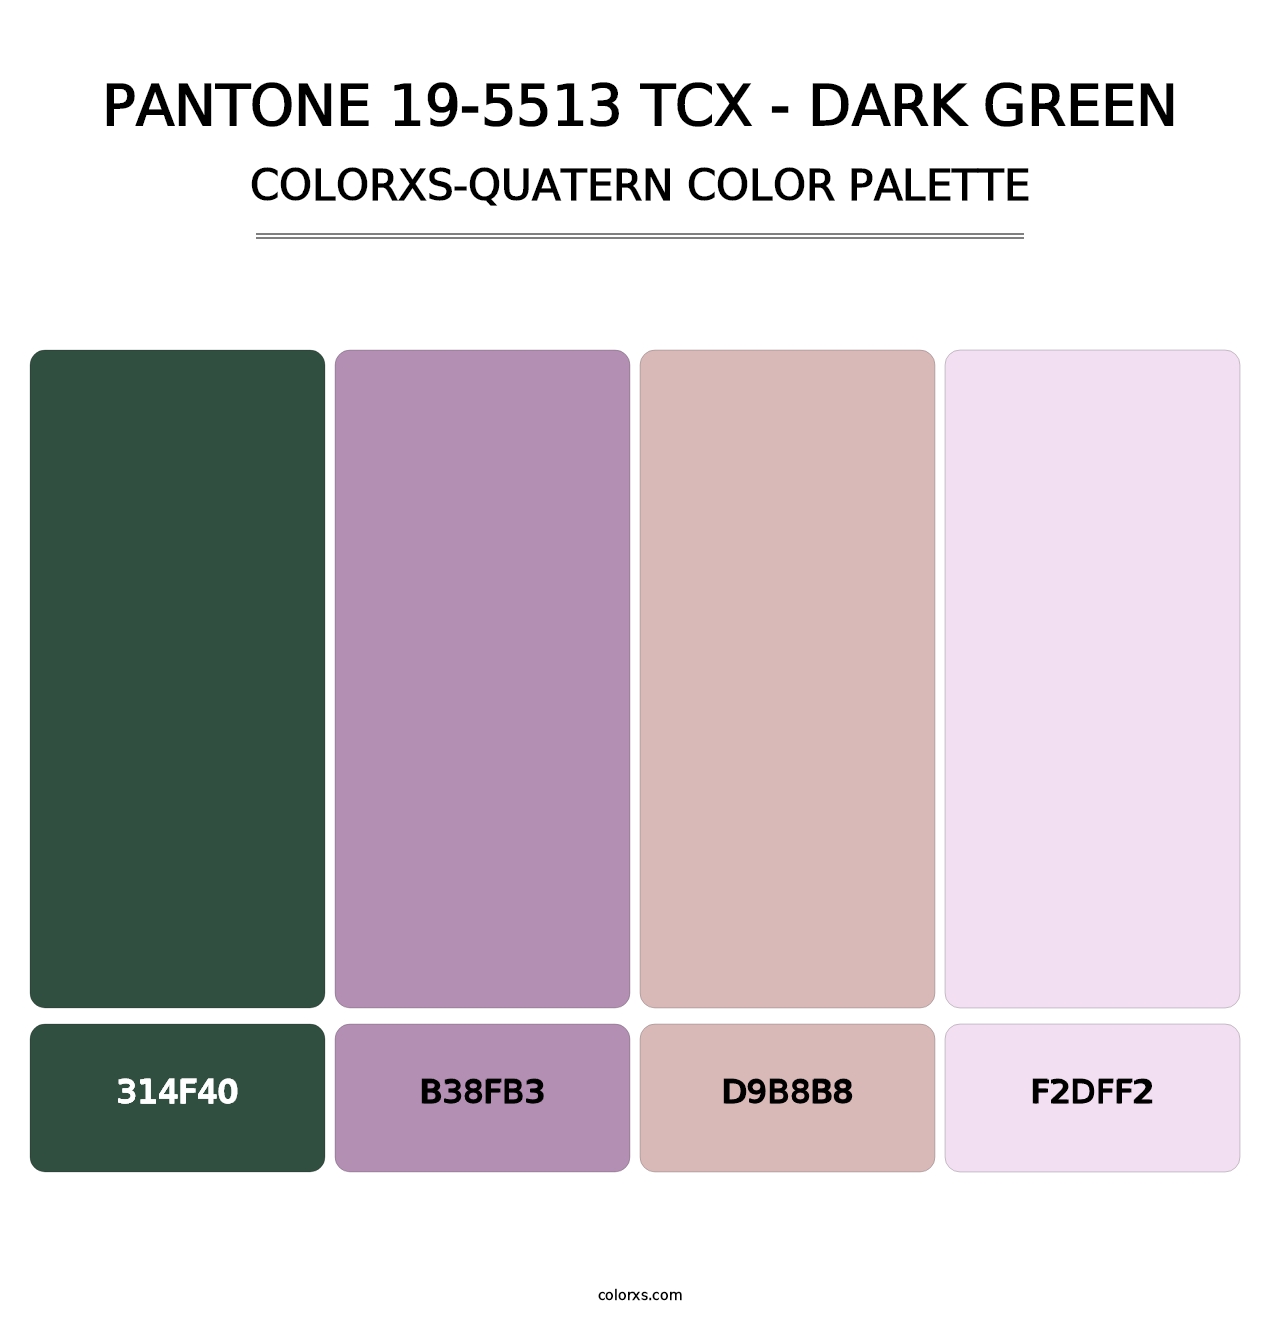 PANTONE 19-5513 TCX - Dark Green - Colorxs Quatern Palette